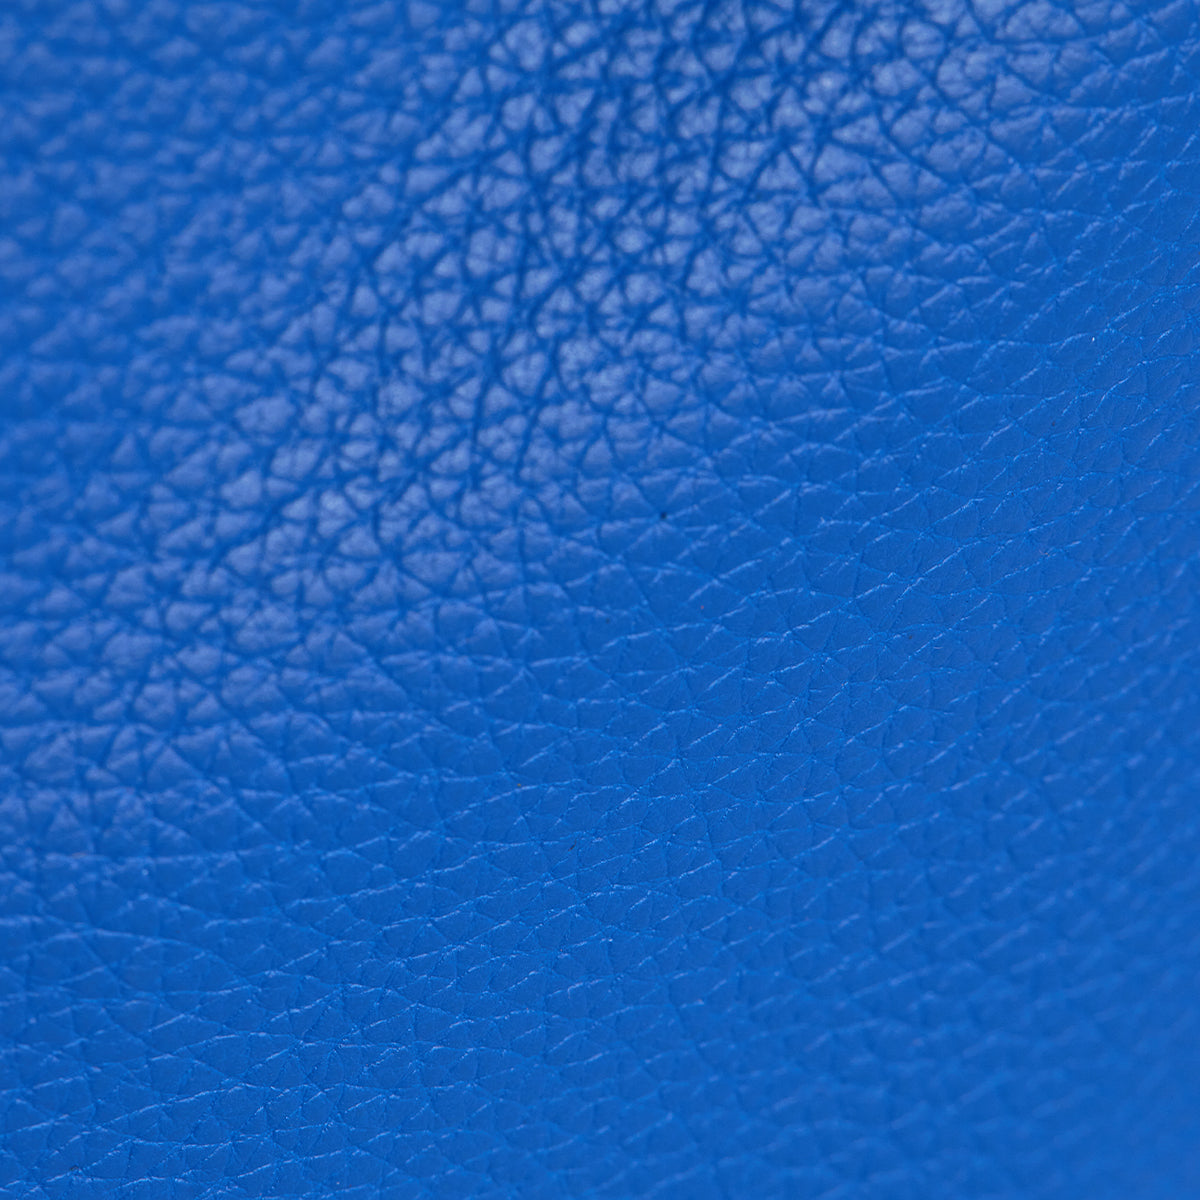 Charles-Crossbody-Avenue-Blue-Leather-Swatch